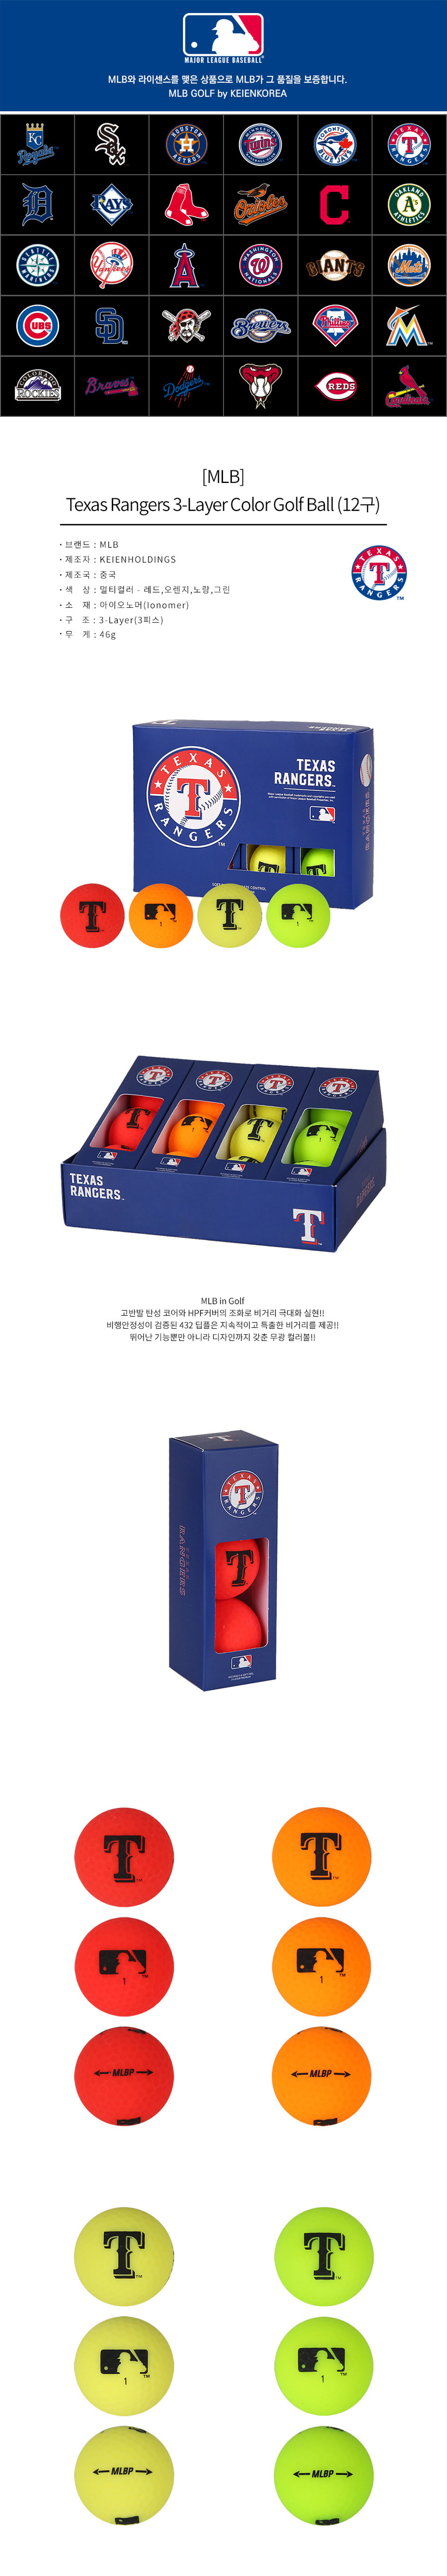 MLB_texas_rangers_3_piece_4_color_ball_19.jpg